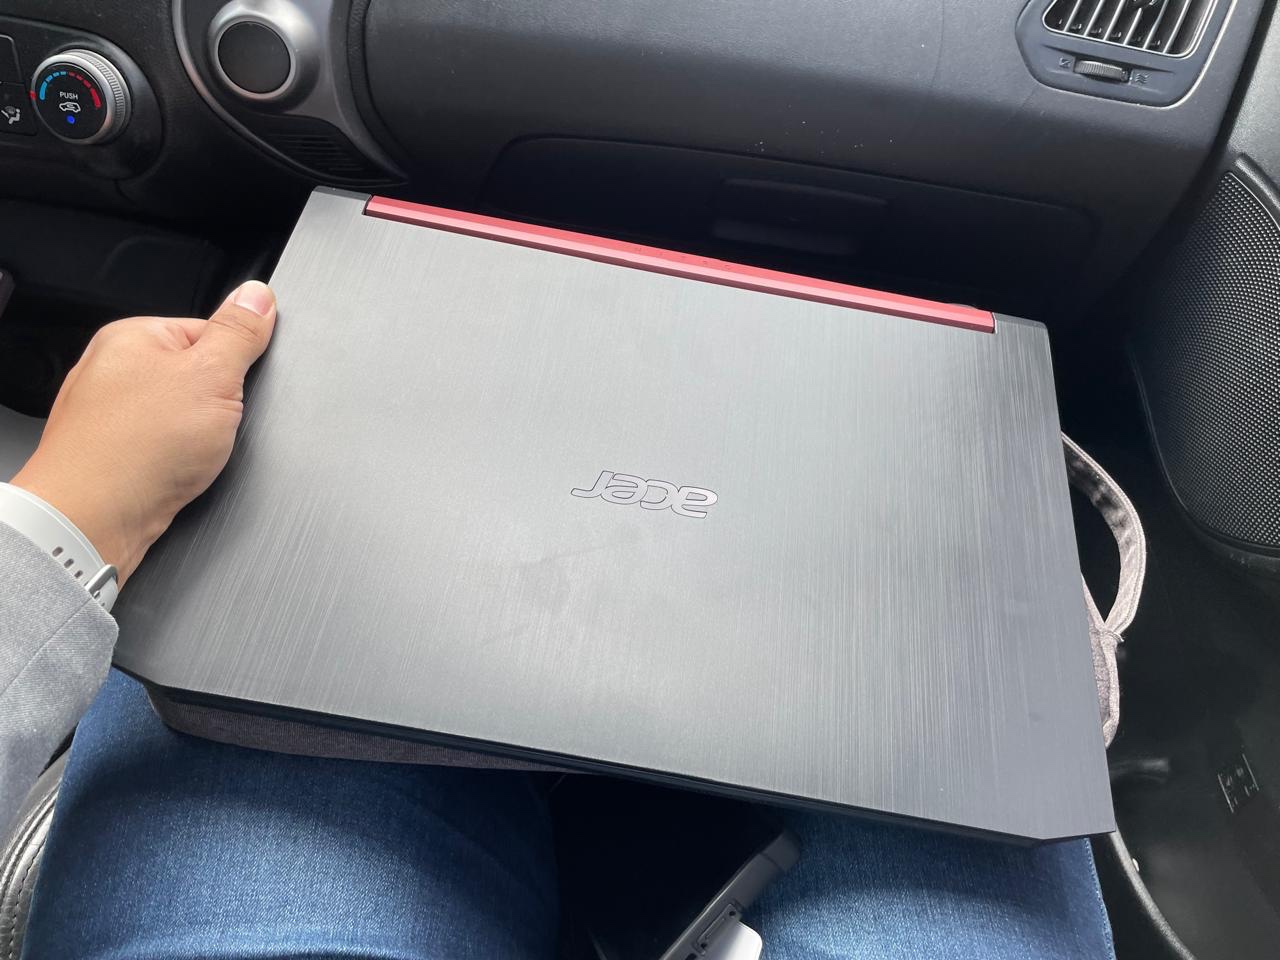 computadoras y laptops - Laptop Acer Nitro 5 I5 N18C3